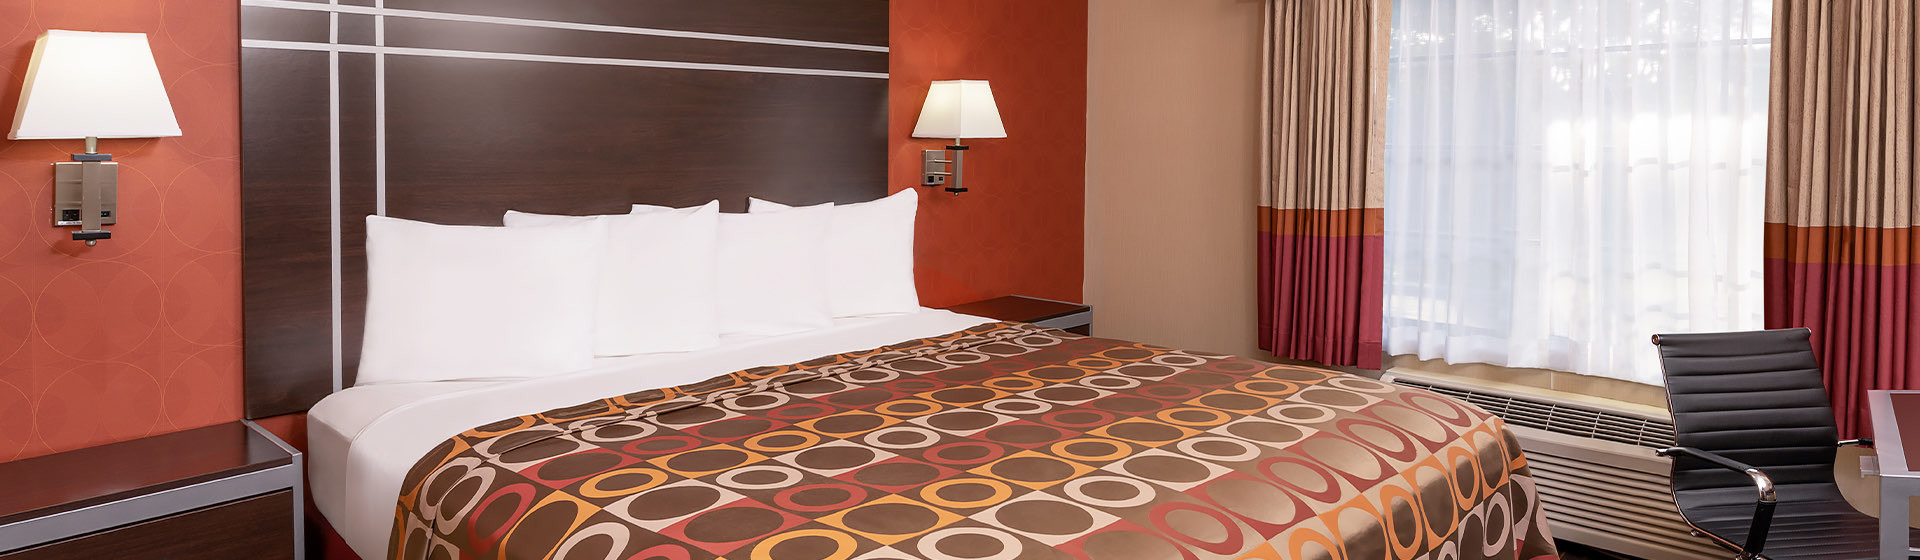 queen size bed in hotel room